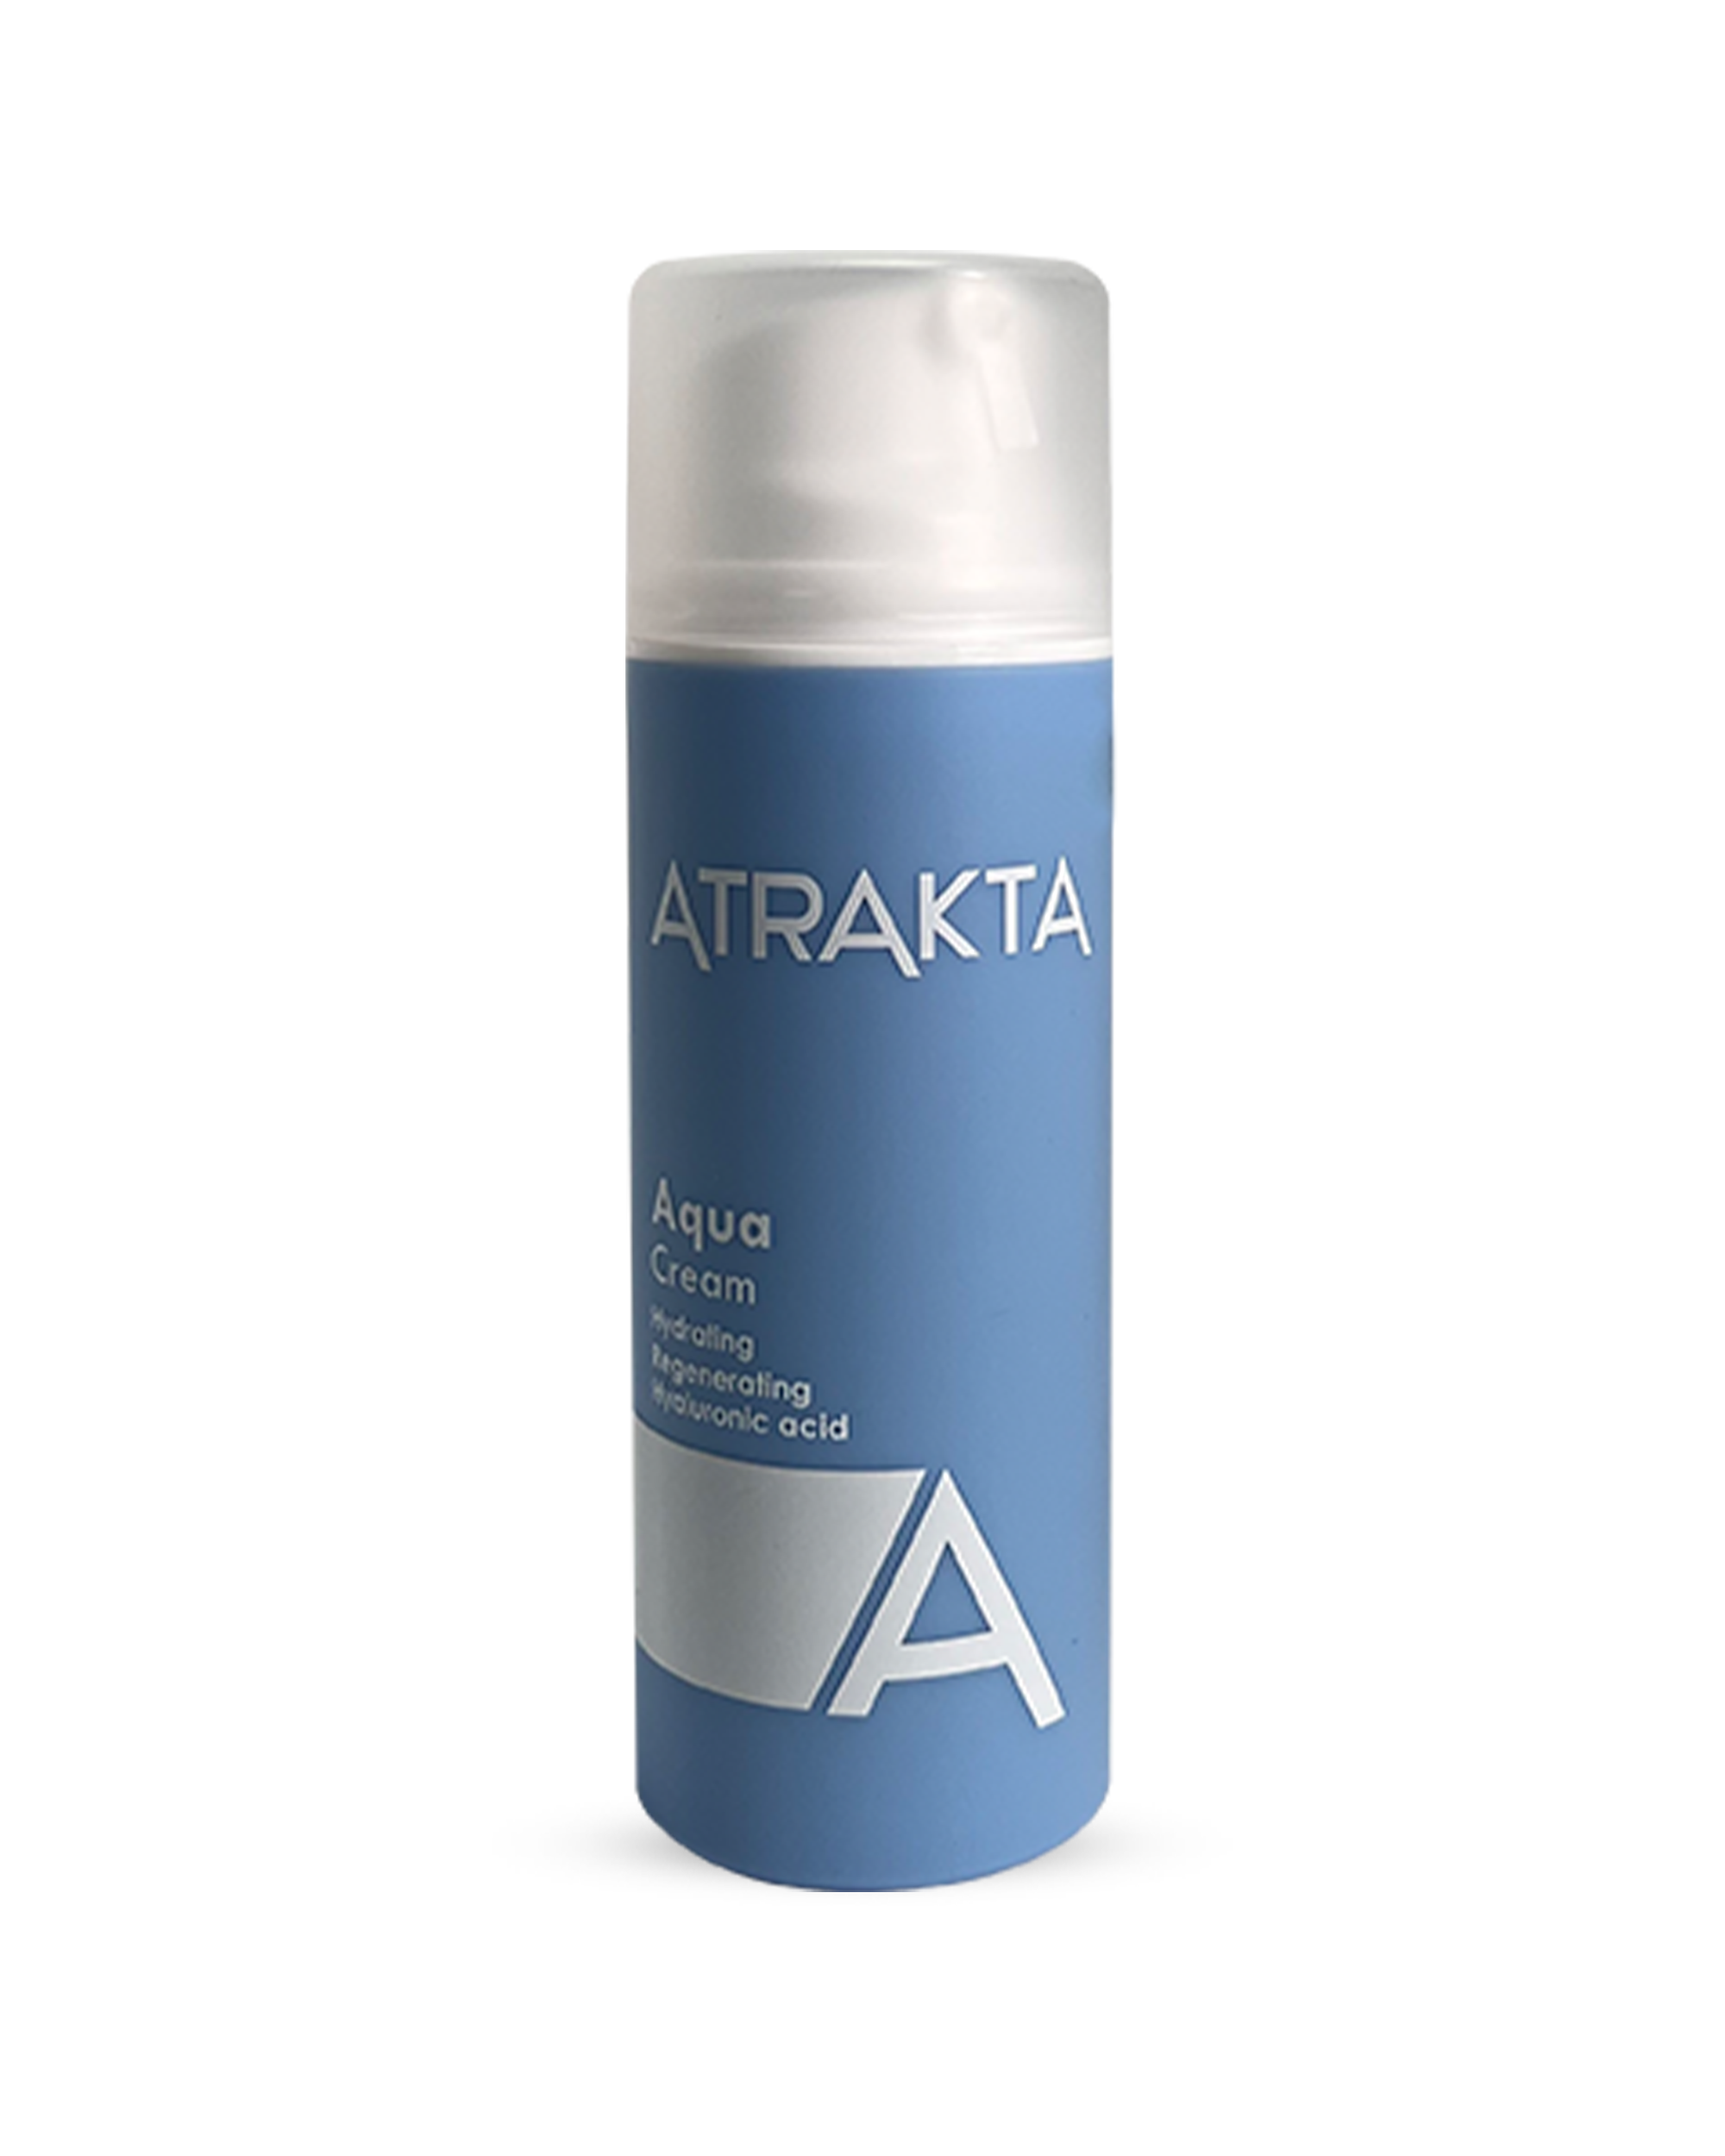 Atrakta Aqua Cream